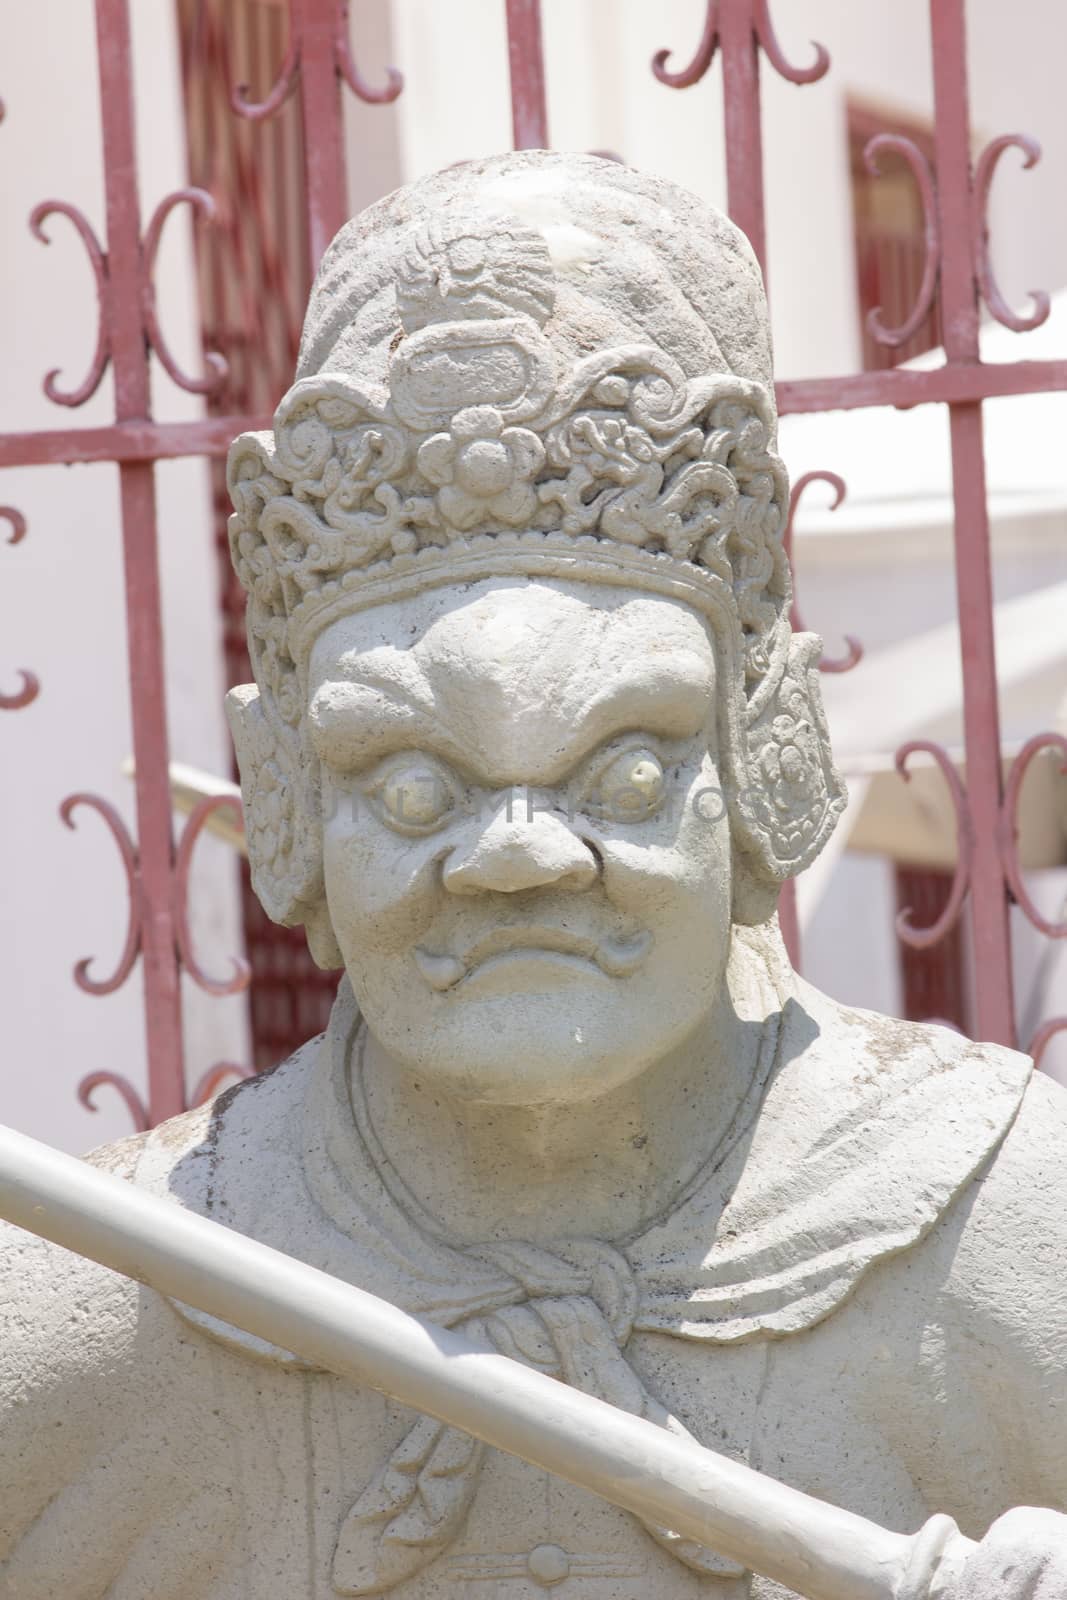 Chinese stone statue in Wat Pho, Bangkok, Thailand